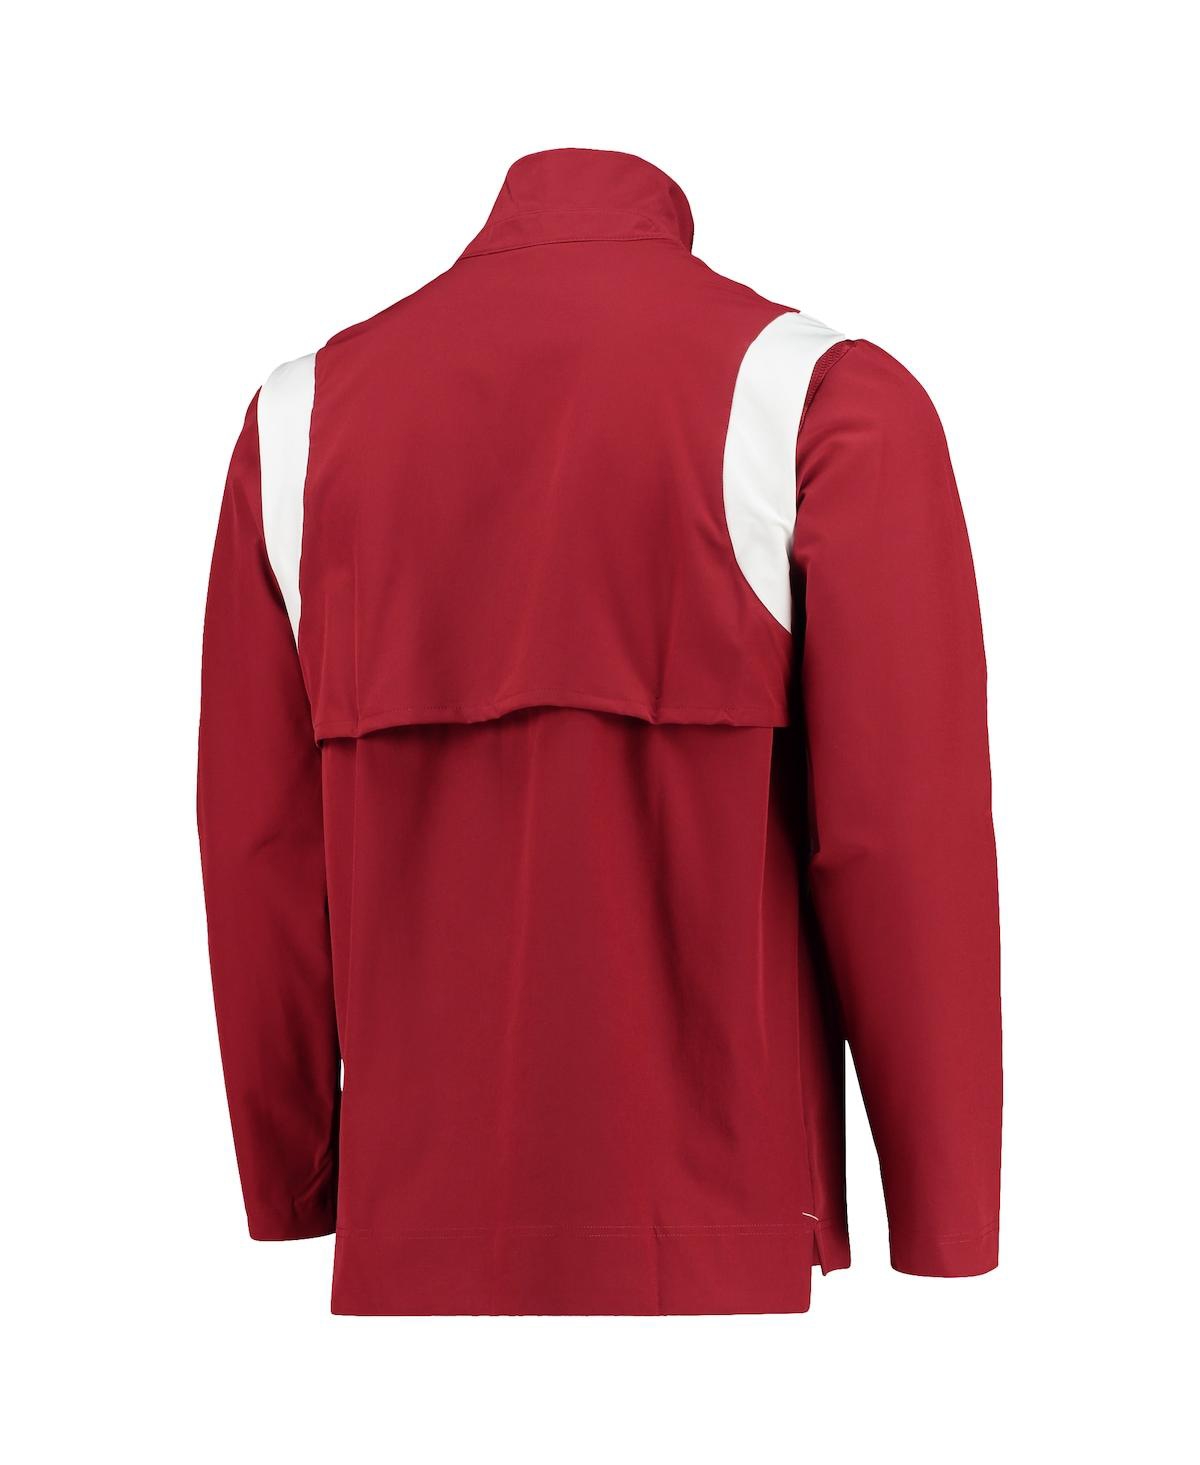 Shop Nike Men's  Crimson Alabama Crimson Tide 2021 Team Coach Quarter-zip Jacket